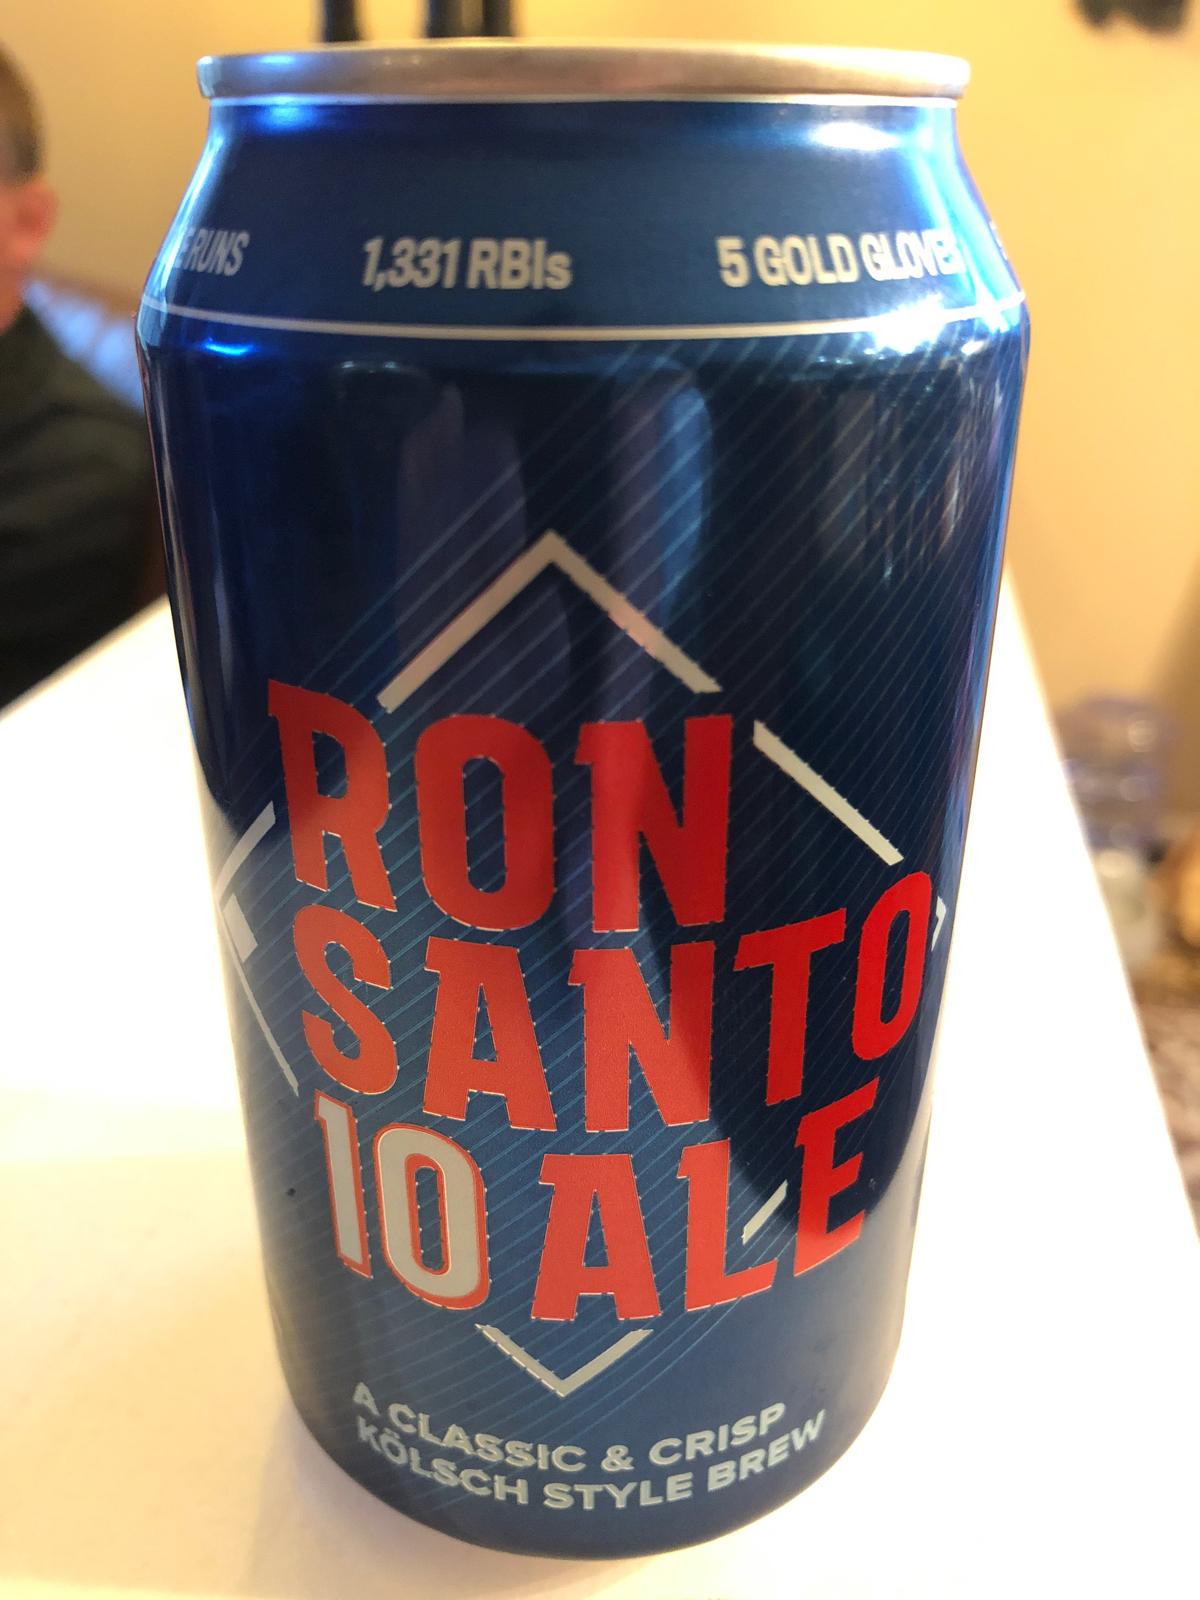 Ron Santo 10 Ale